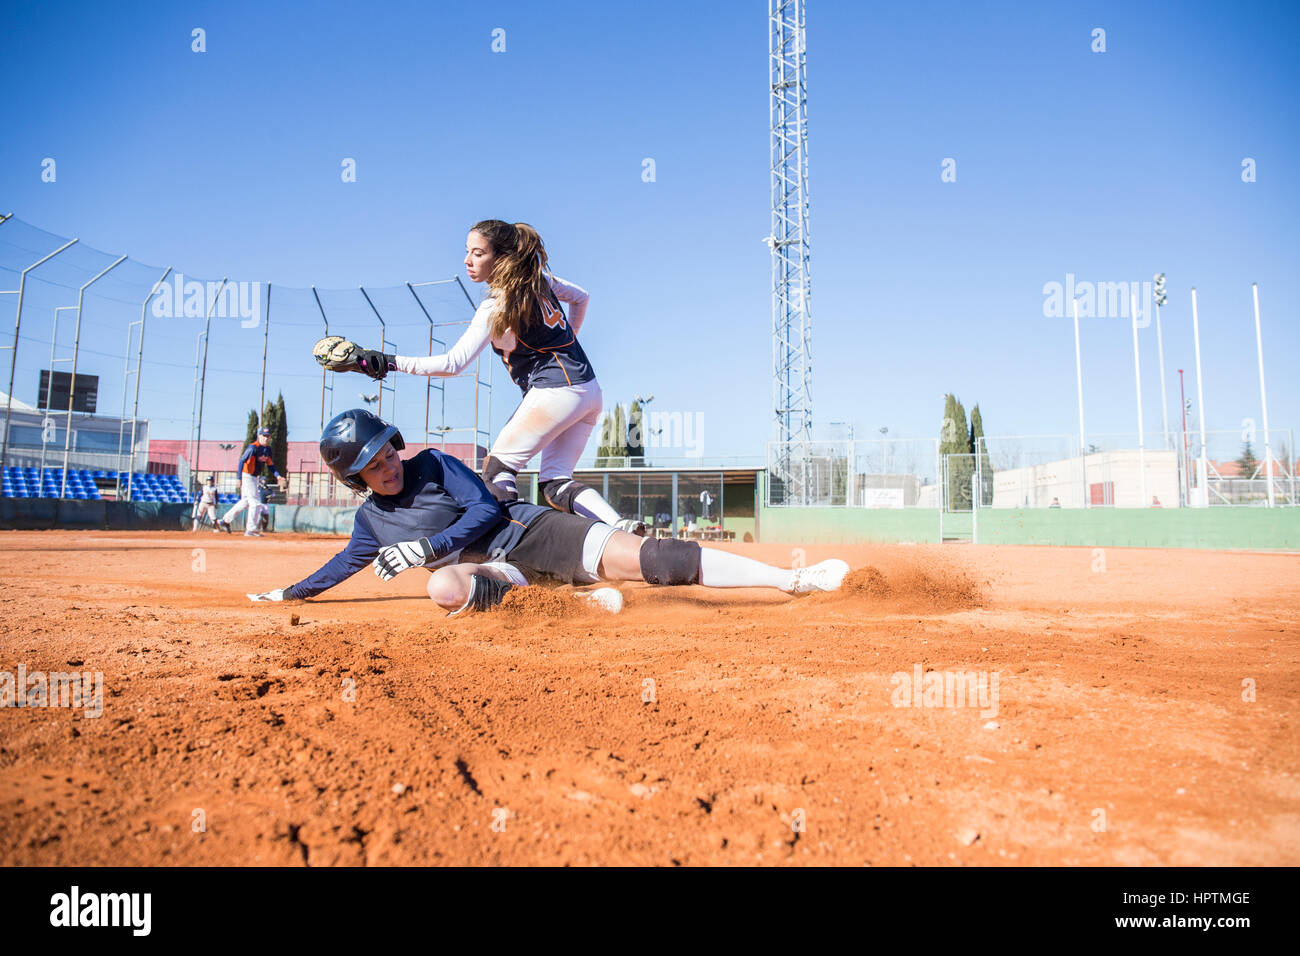 Baseball player sliding to the base during a baseball game Stock Photo